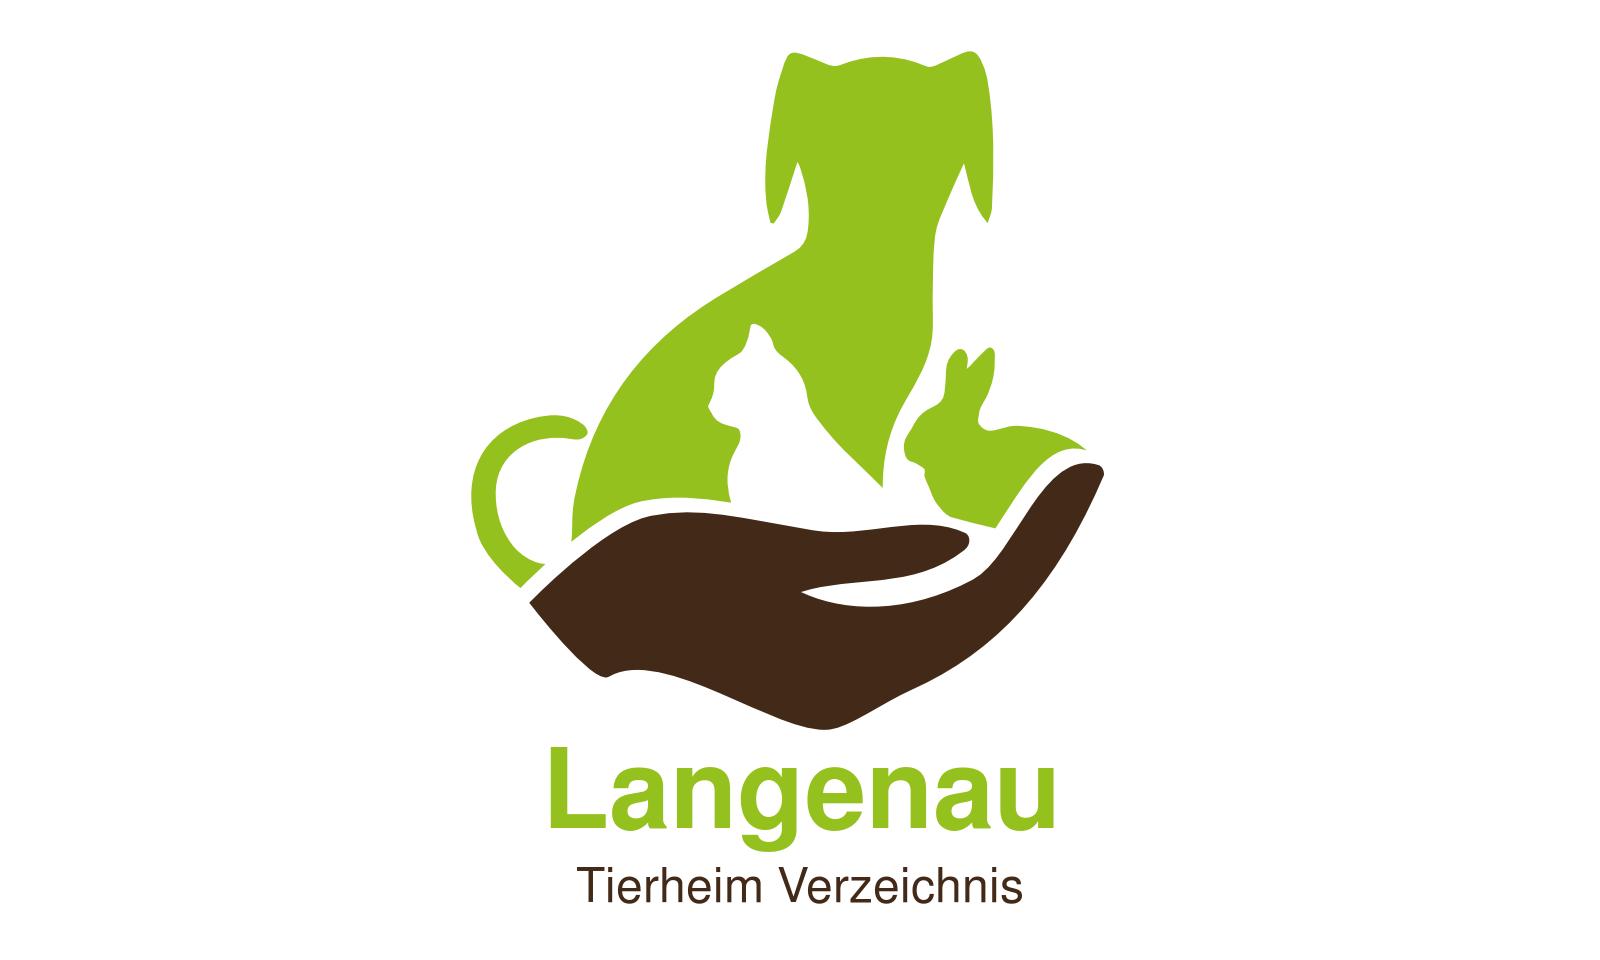 Tierheim Langenau